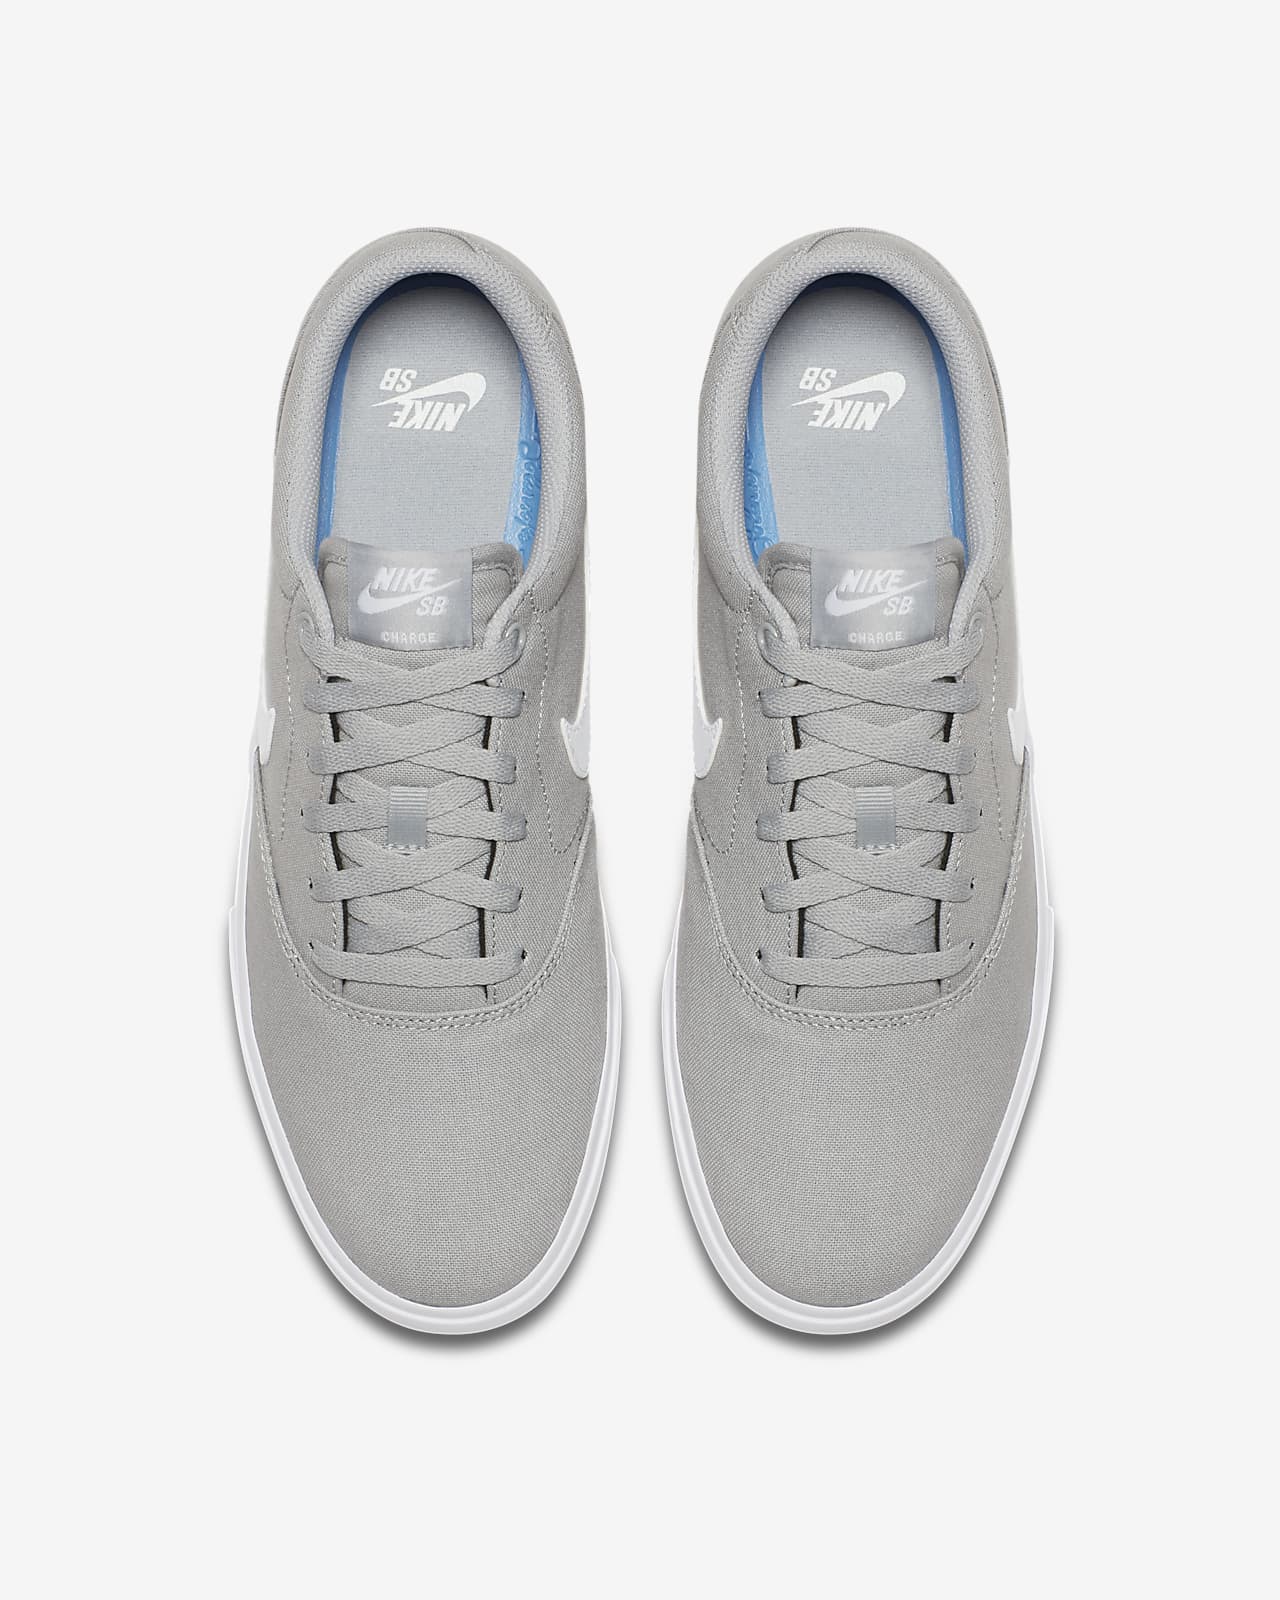 Nike SB Charge Canvas Skate Shoe